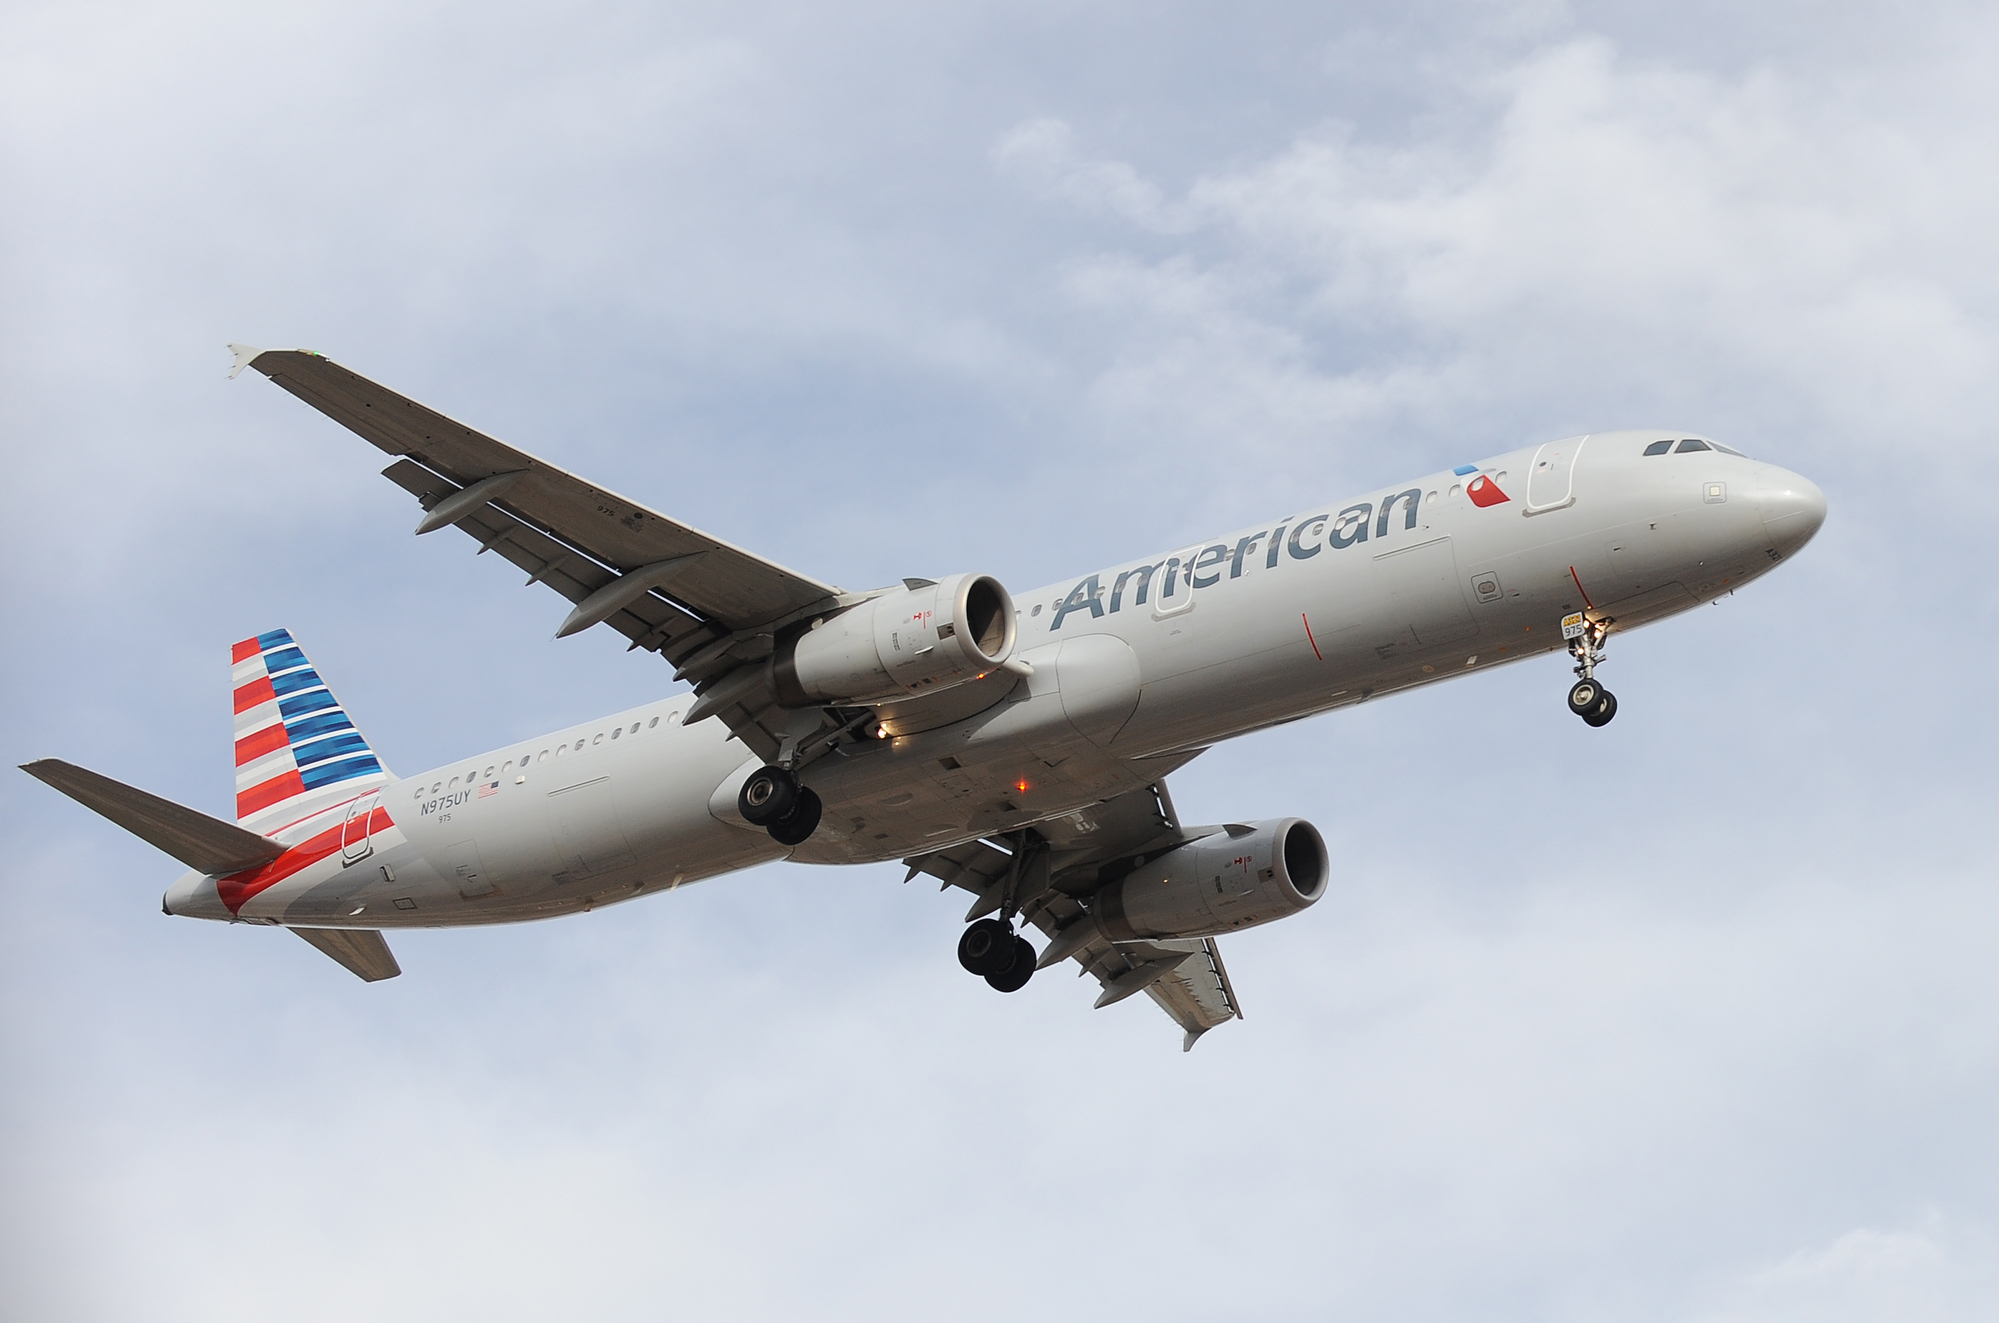 American Airlines aircraft landing at Sky Harbor Airport in Phoenix Arizona